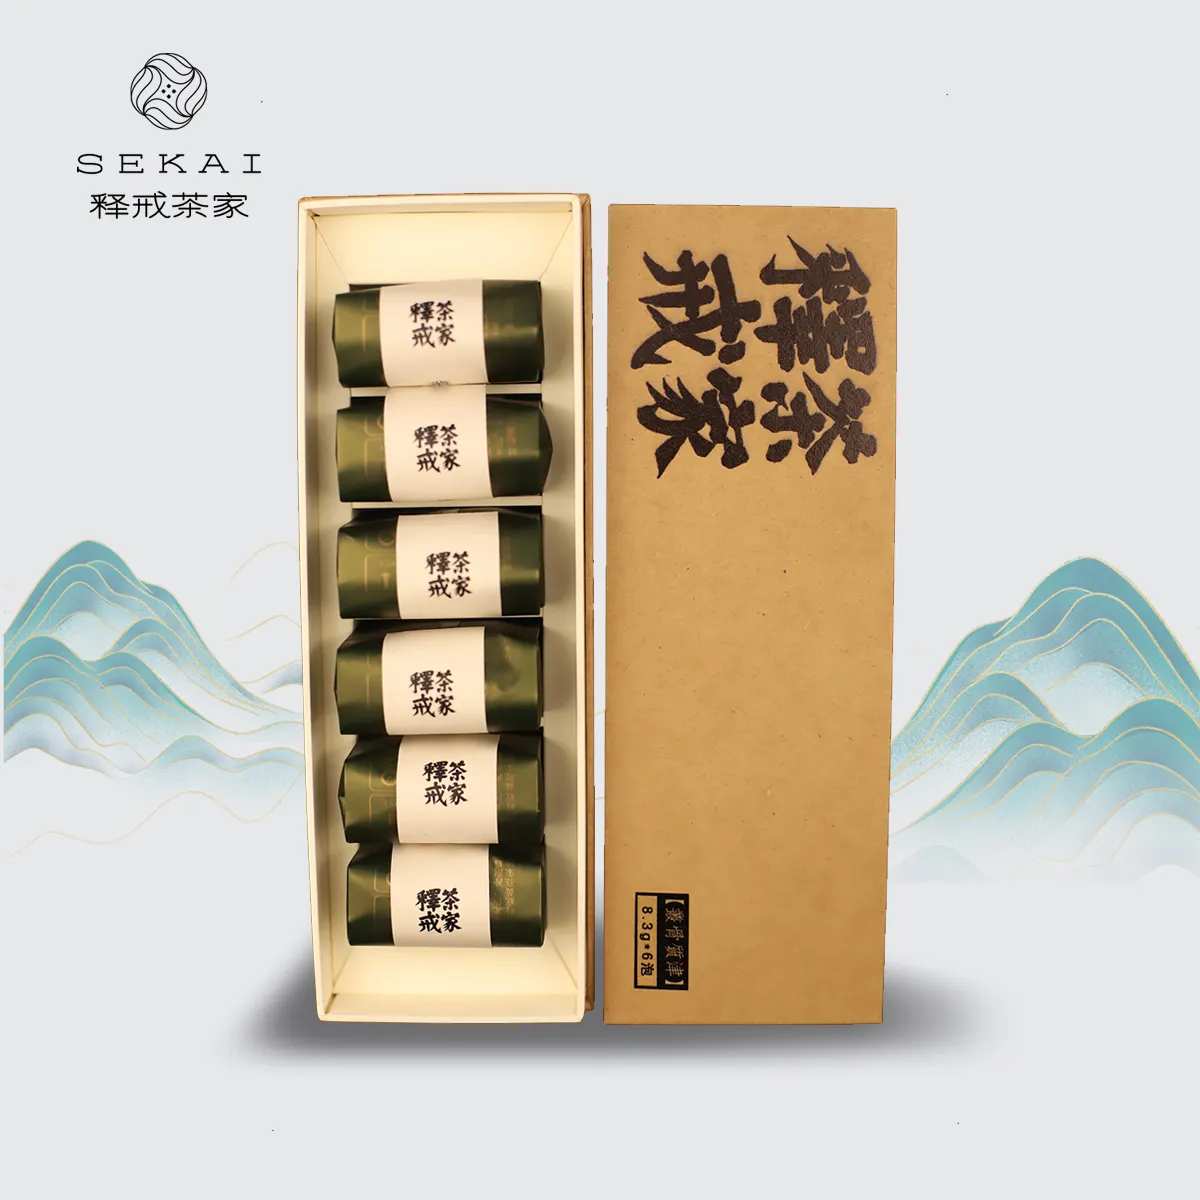 China High Quality Tea Gift set Box Wuyishan Pure Natural Organic Handmade Oolong Tea Leaves